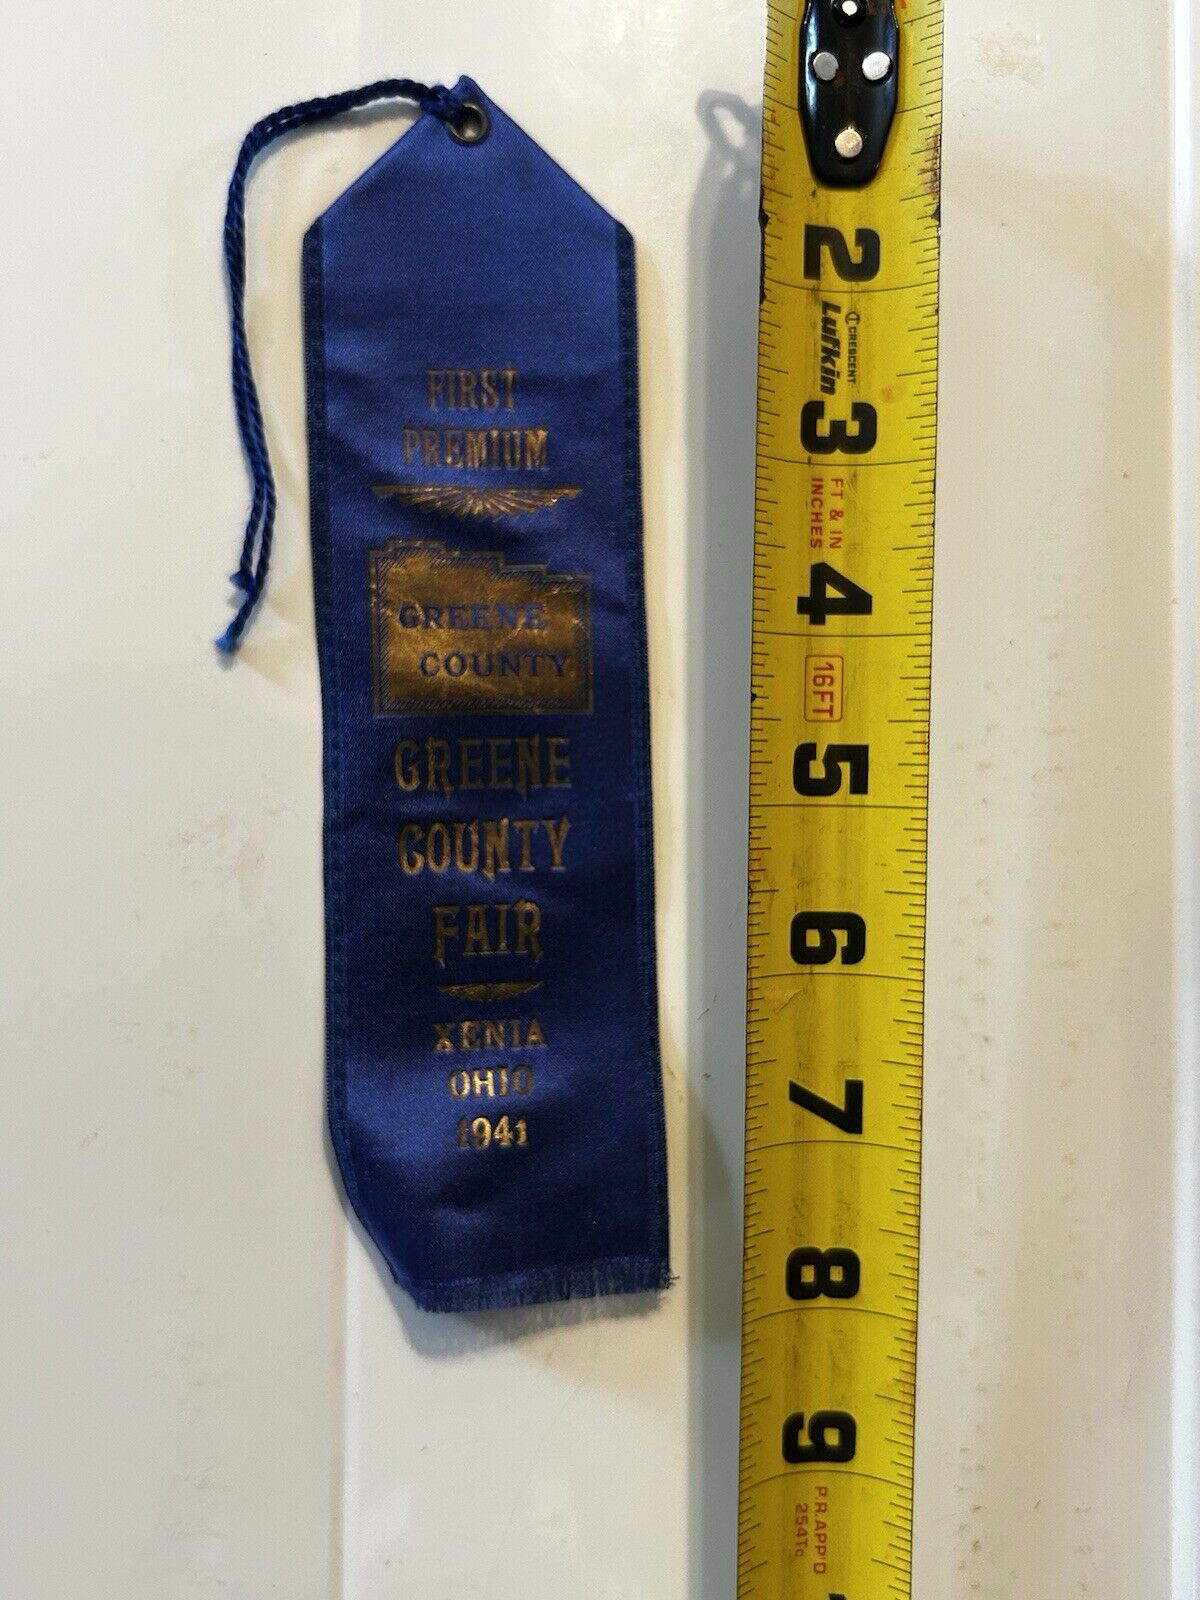 Vintage Fair Ribbon 1941 First Premium Greene County Xenia Ohio